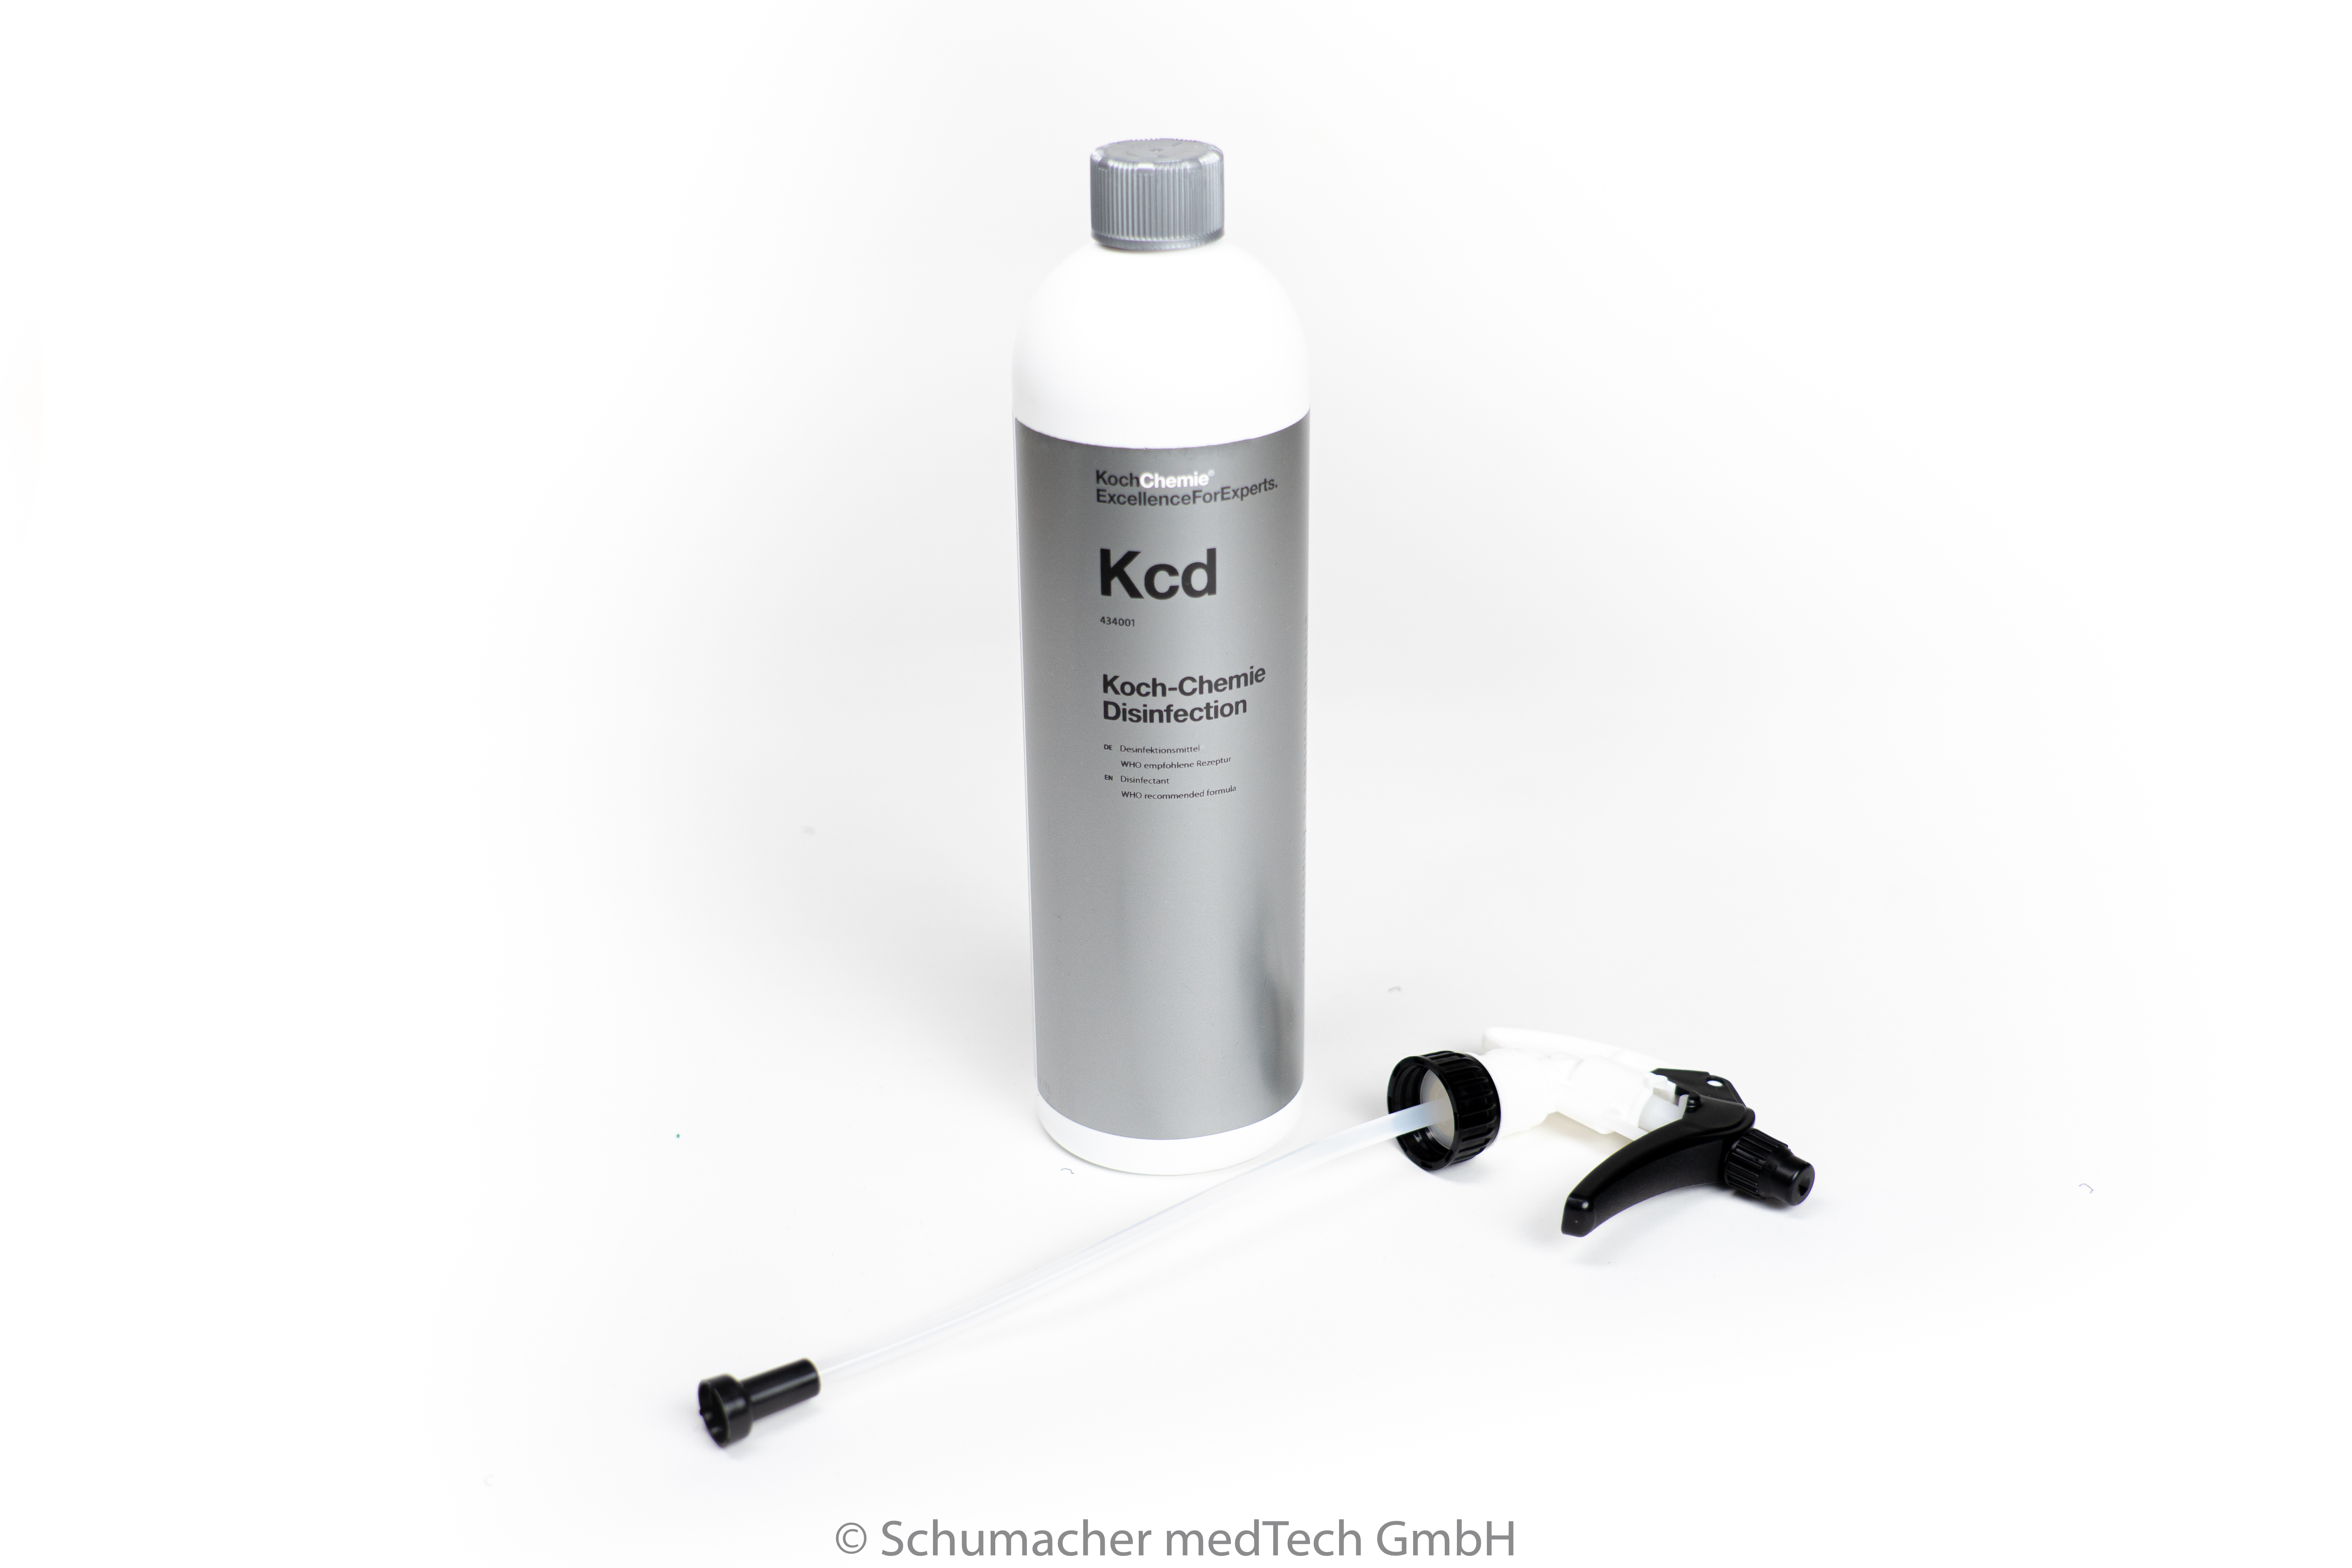 KCD- Koch-Chemie Disinfection - Desinfektion